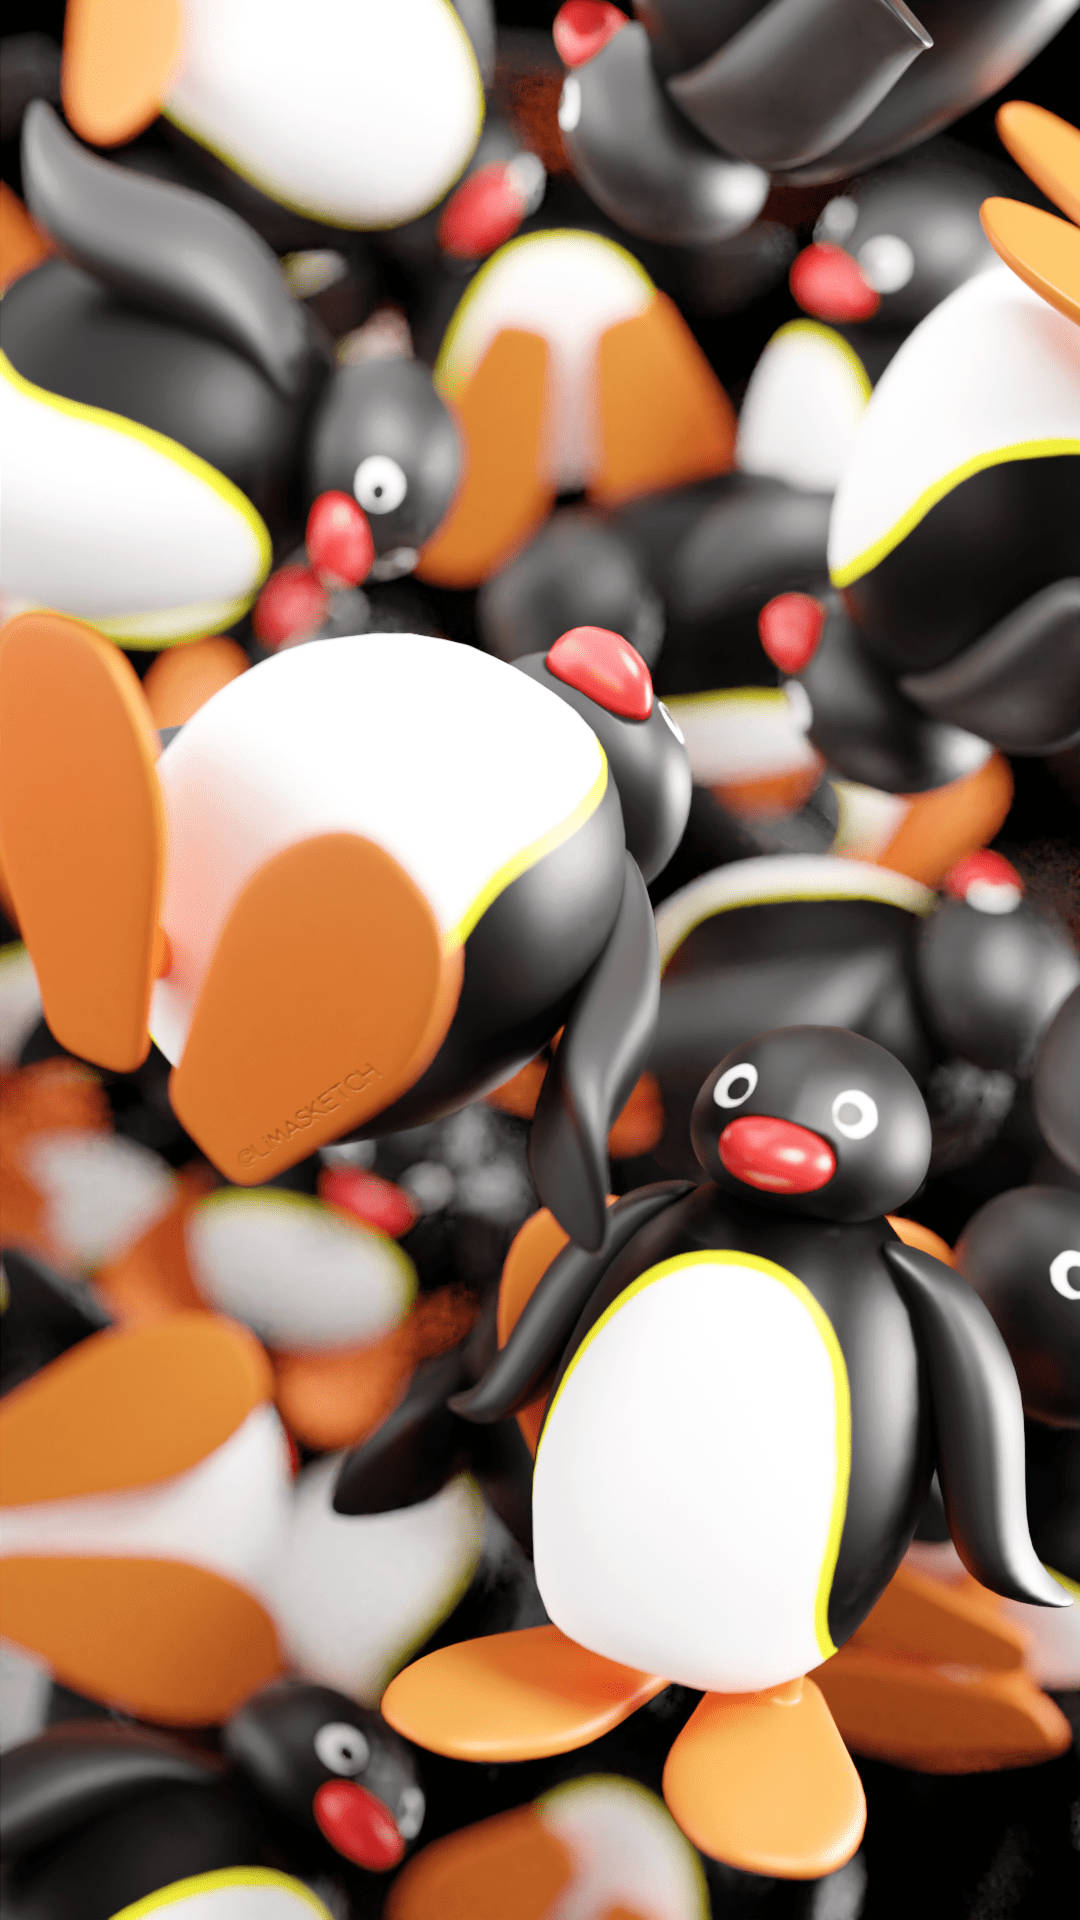 Pingu Toy Figures Background